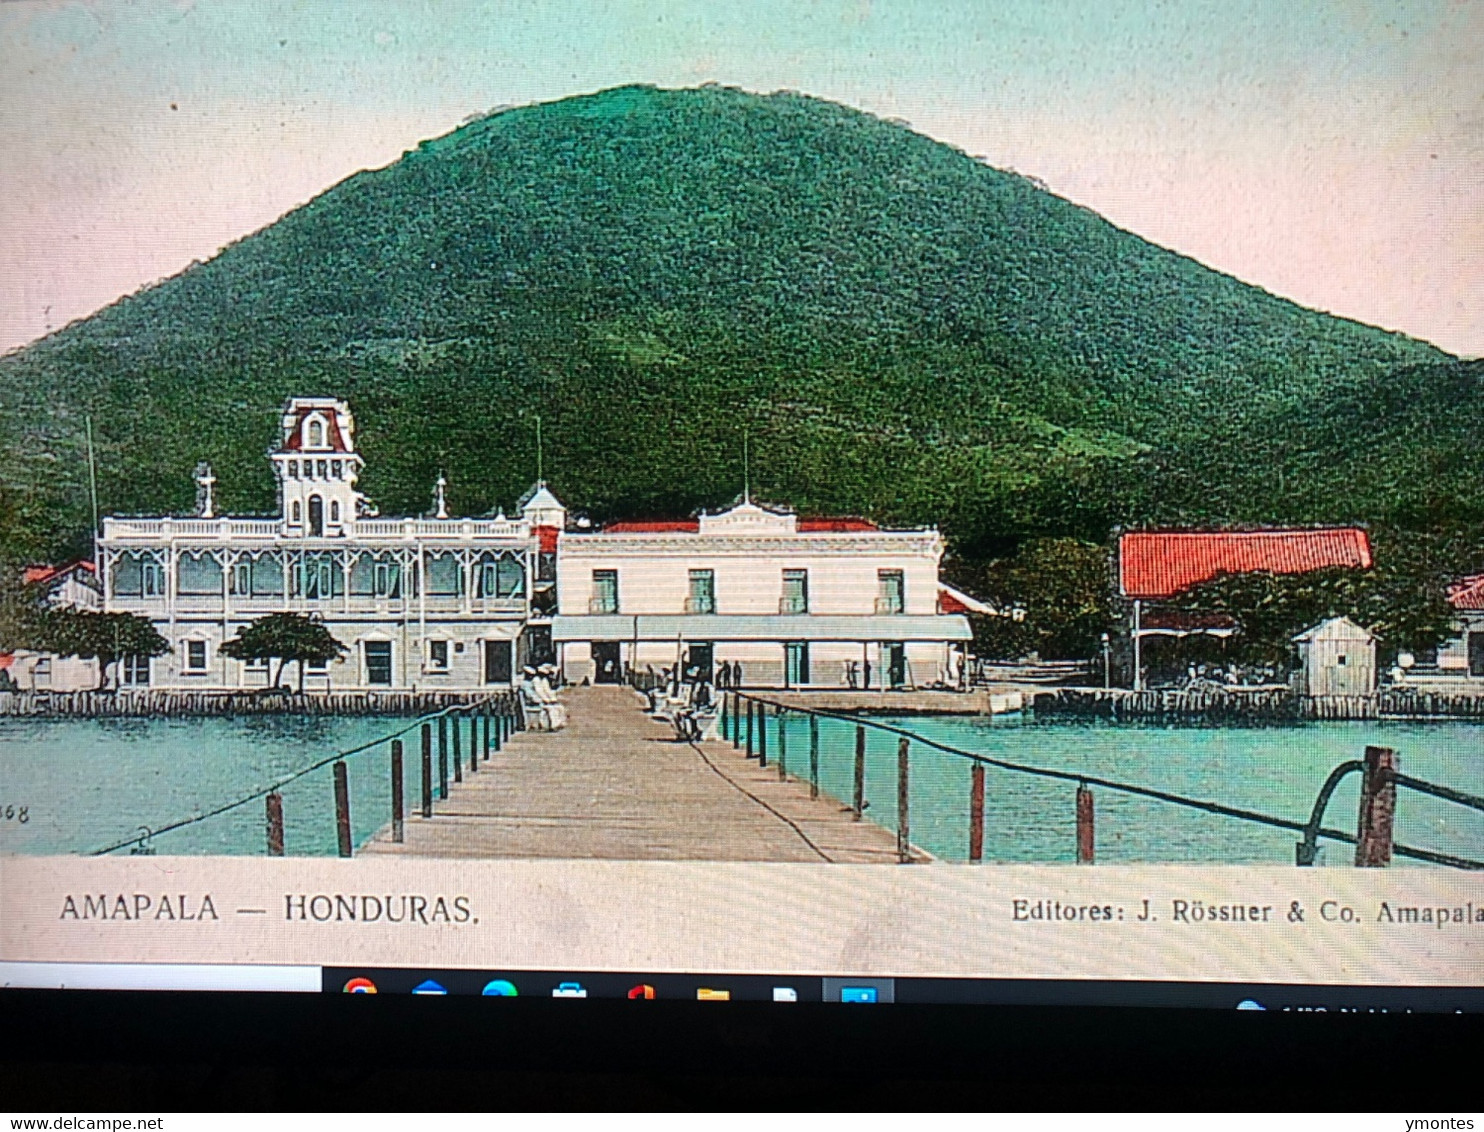 Published By Jose Rossner, Amapala 1908 - Honduras